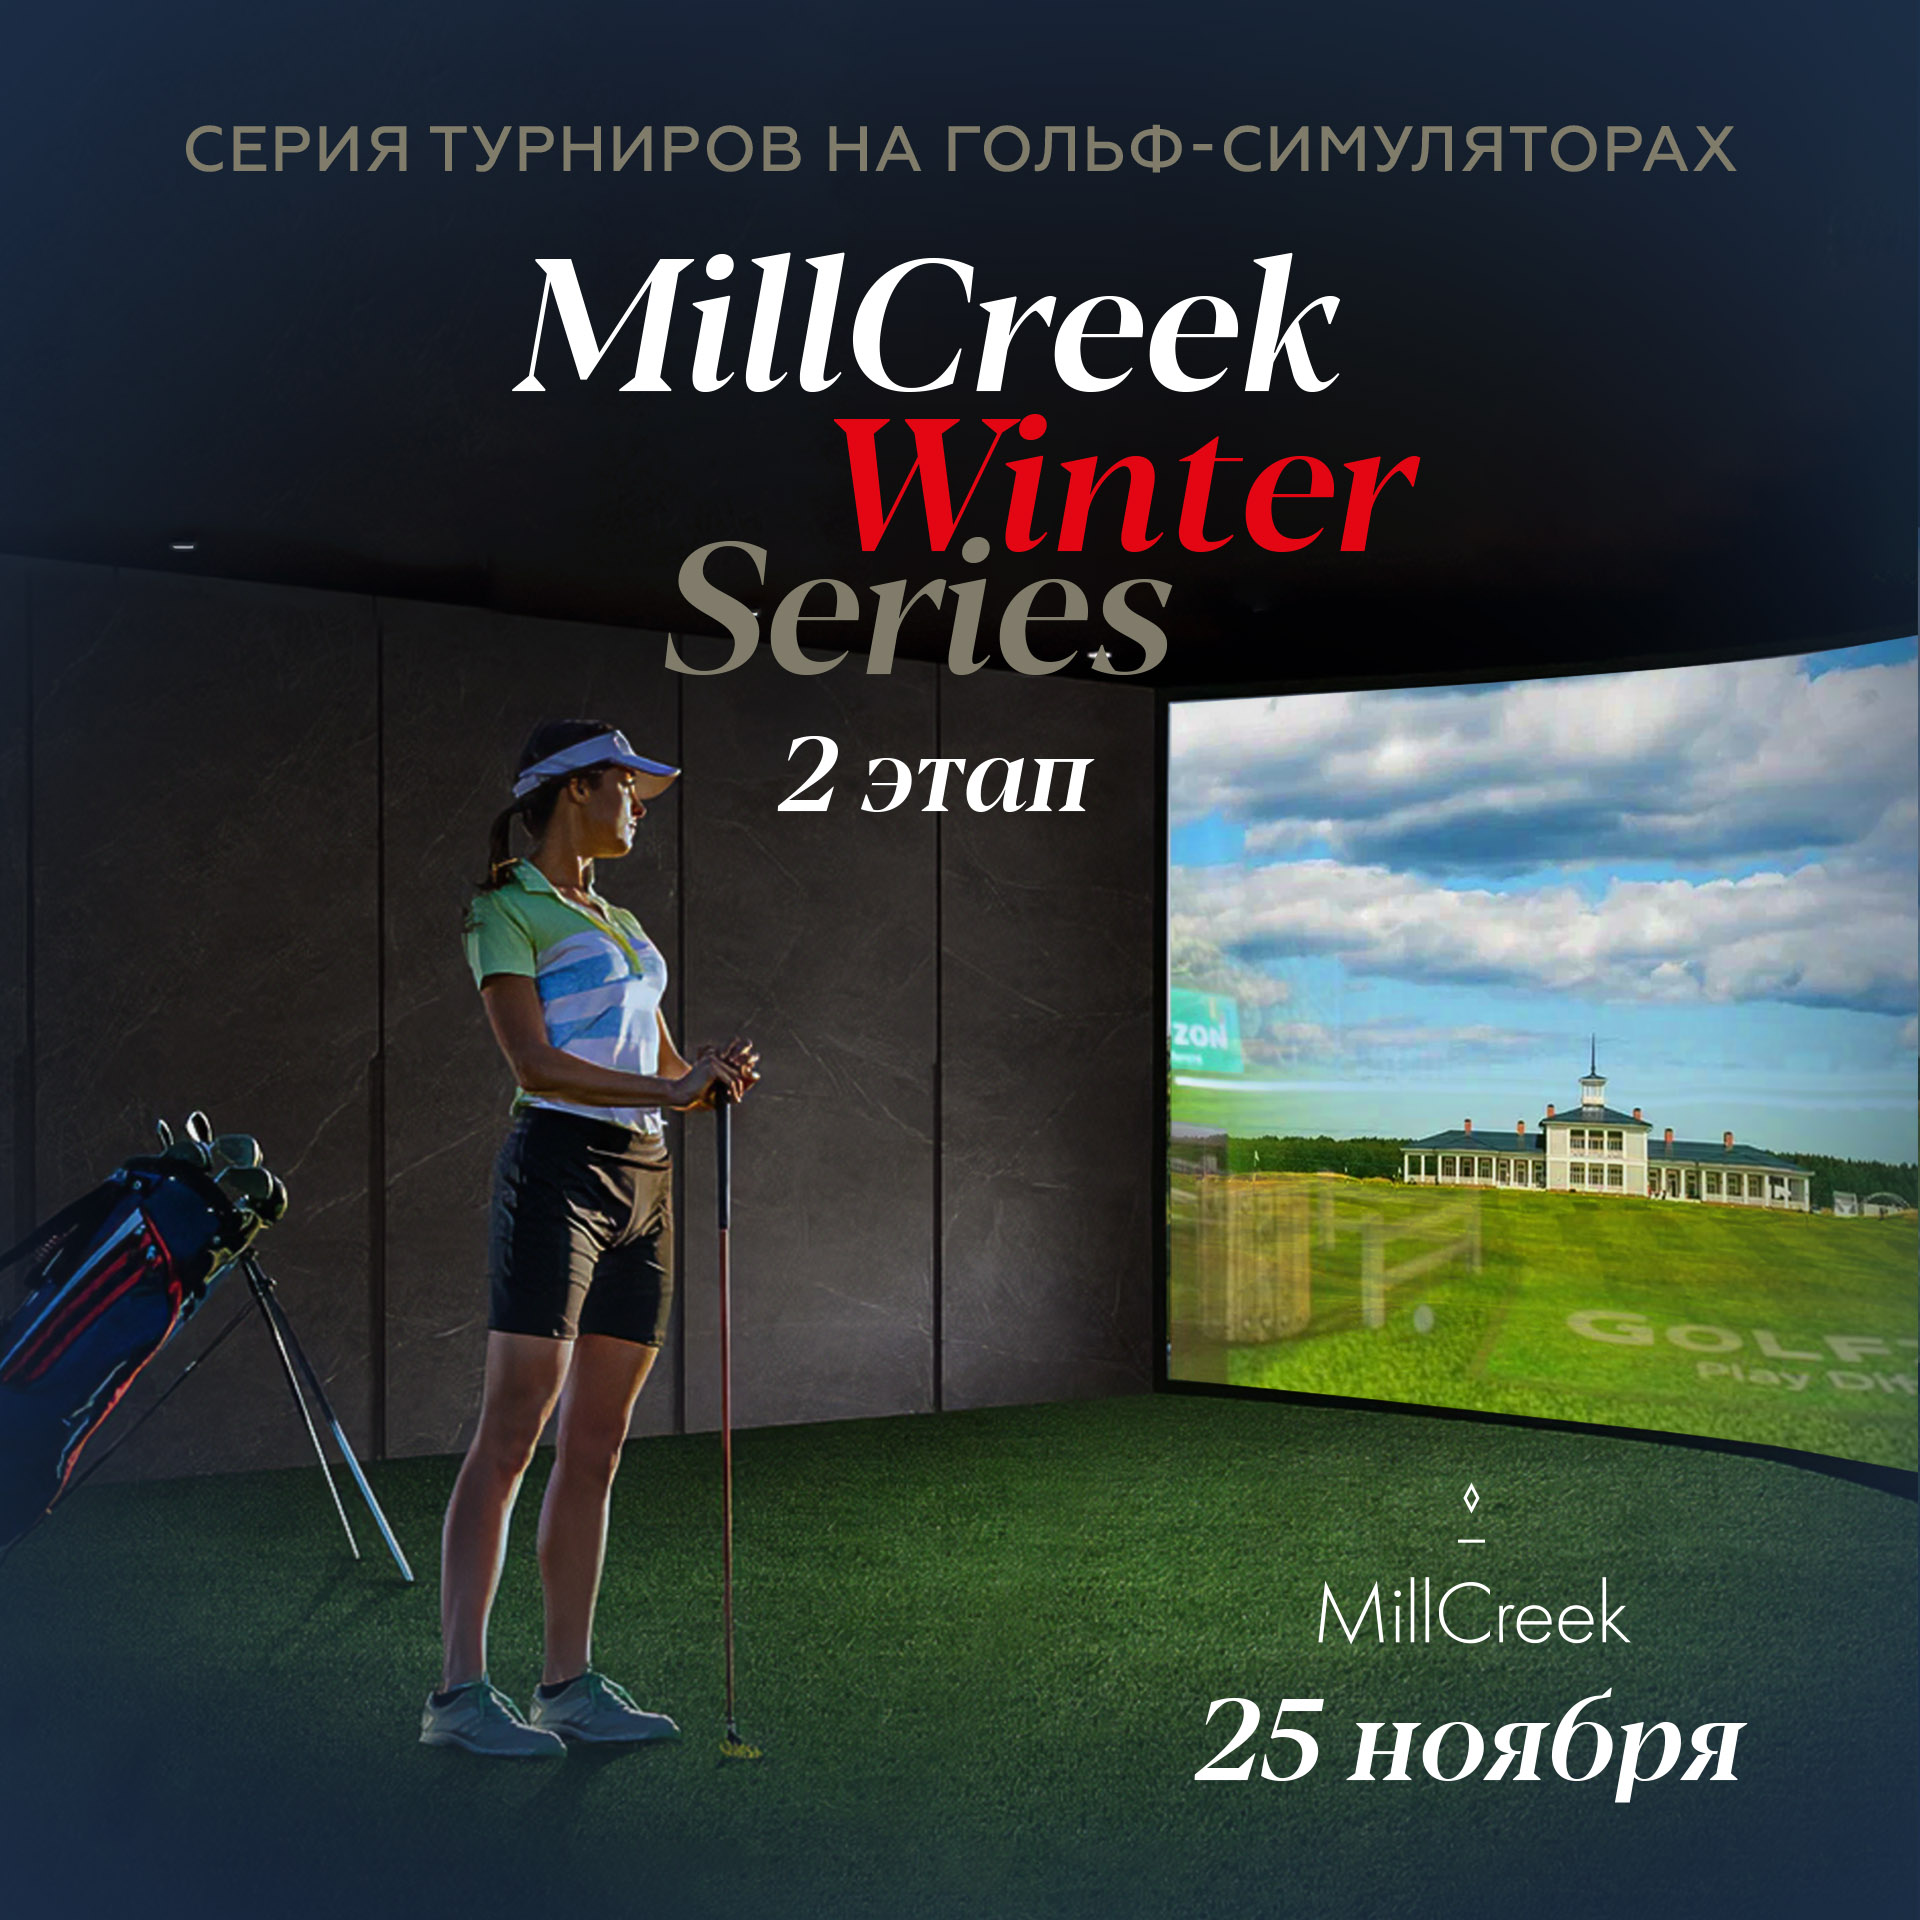 MillCreek Winter Series 2 этап